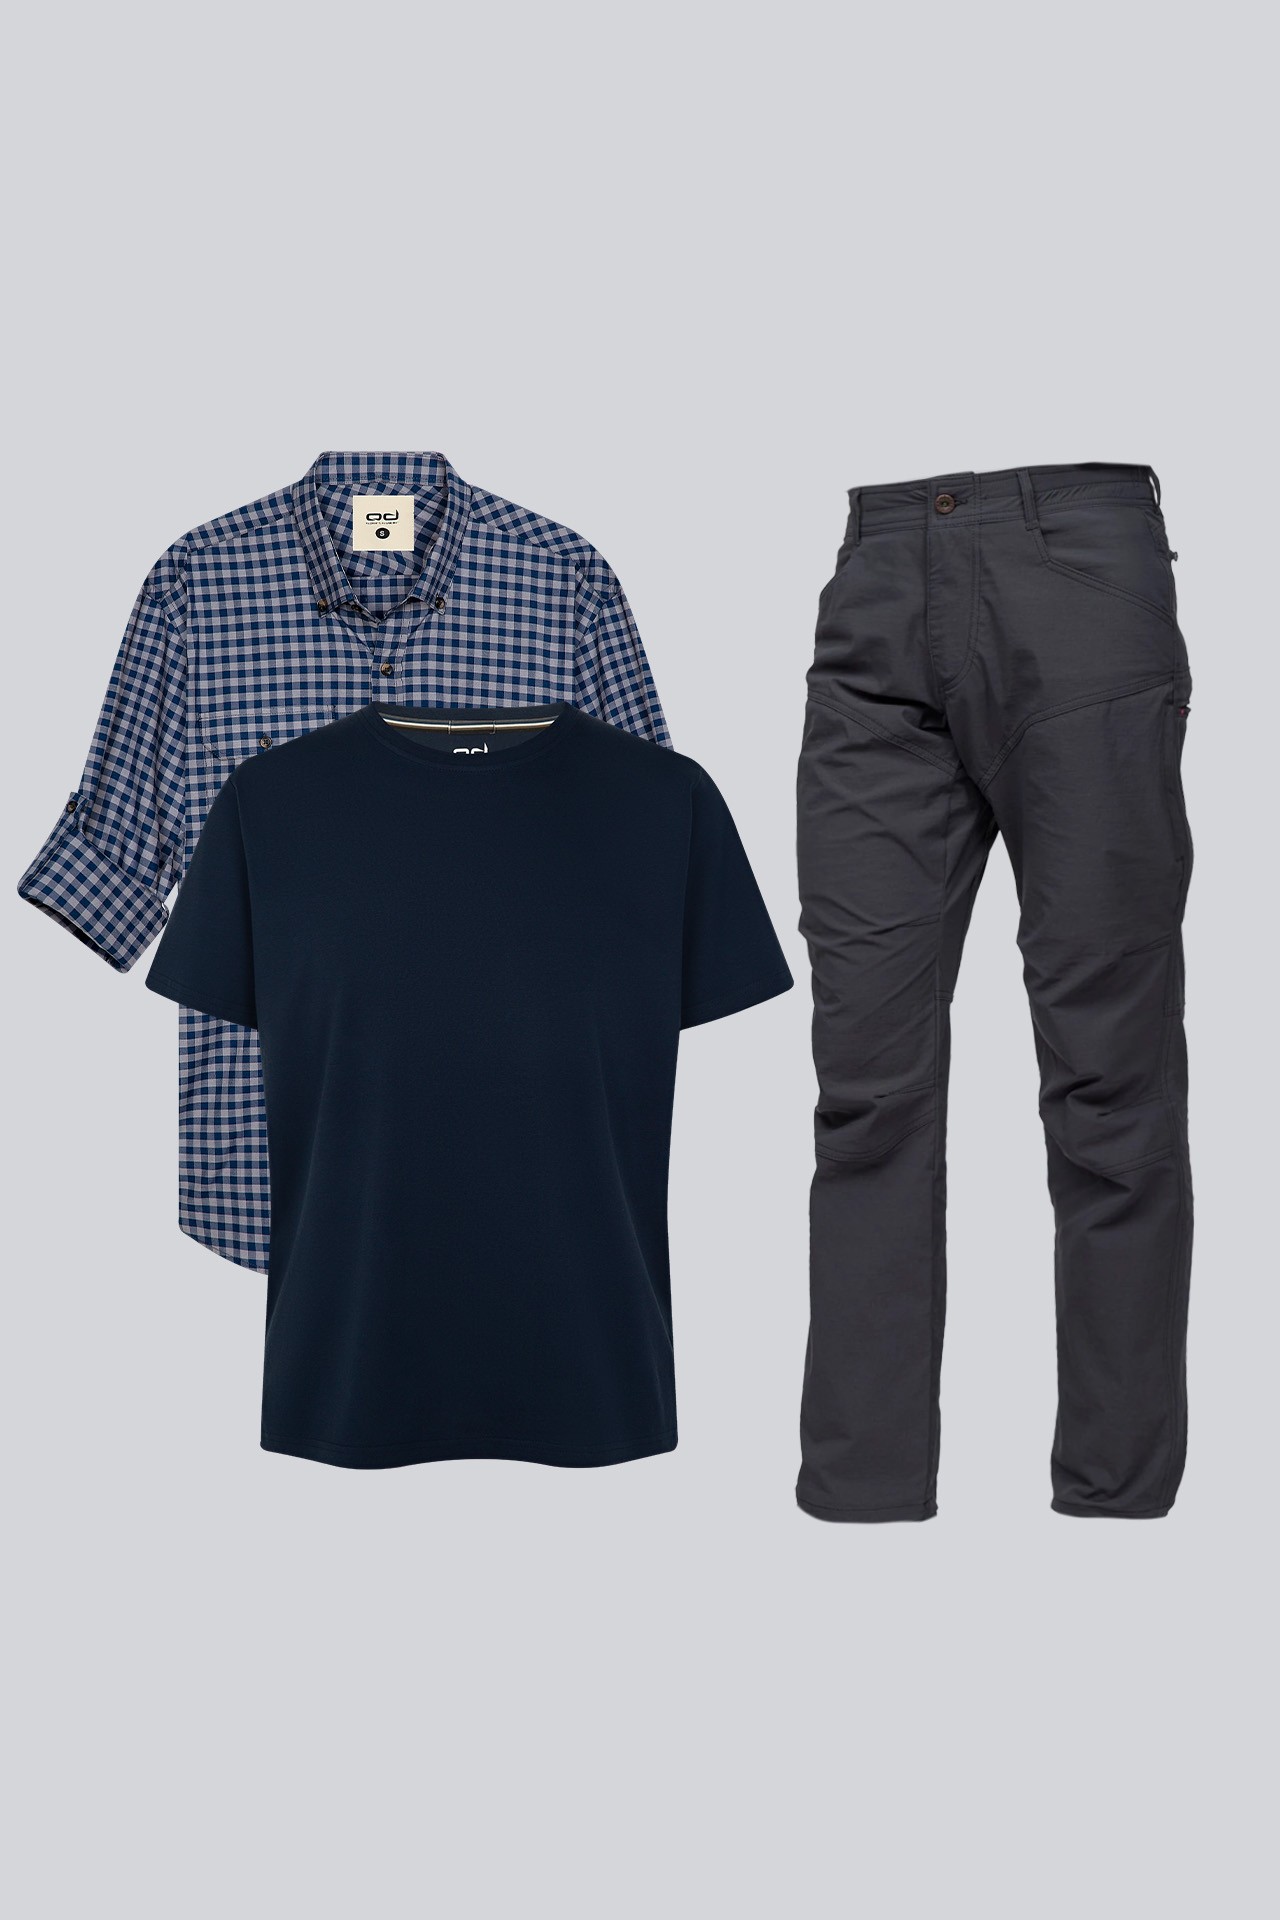 Soft Tees Basic T-Shirt + SPRG Flannel Gömlek + All-Time Pantolon Set 